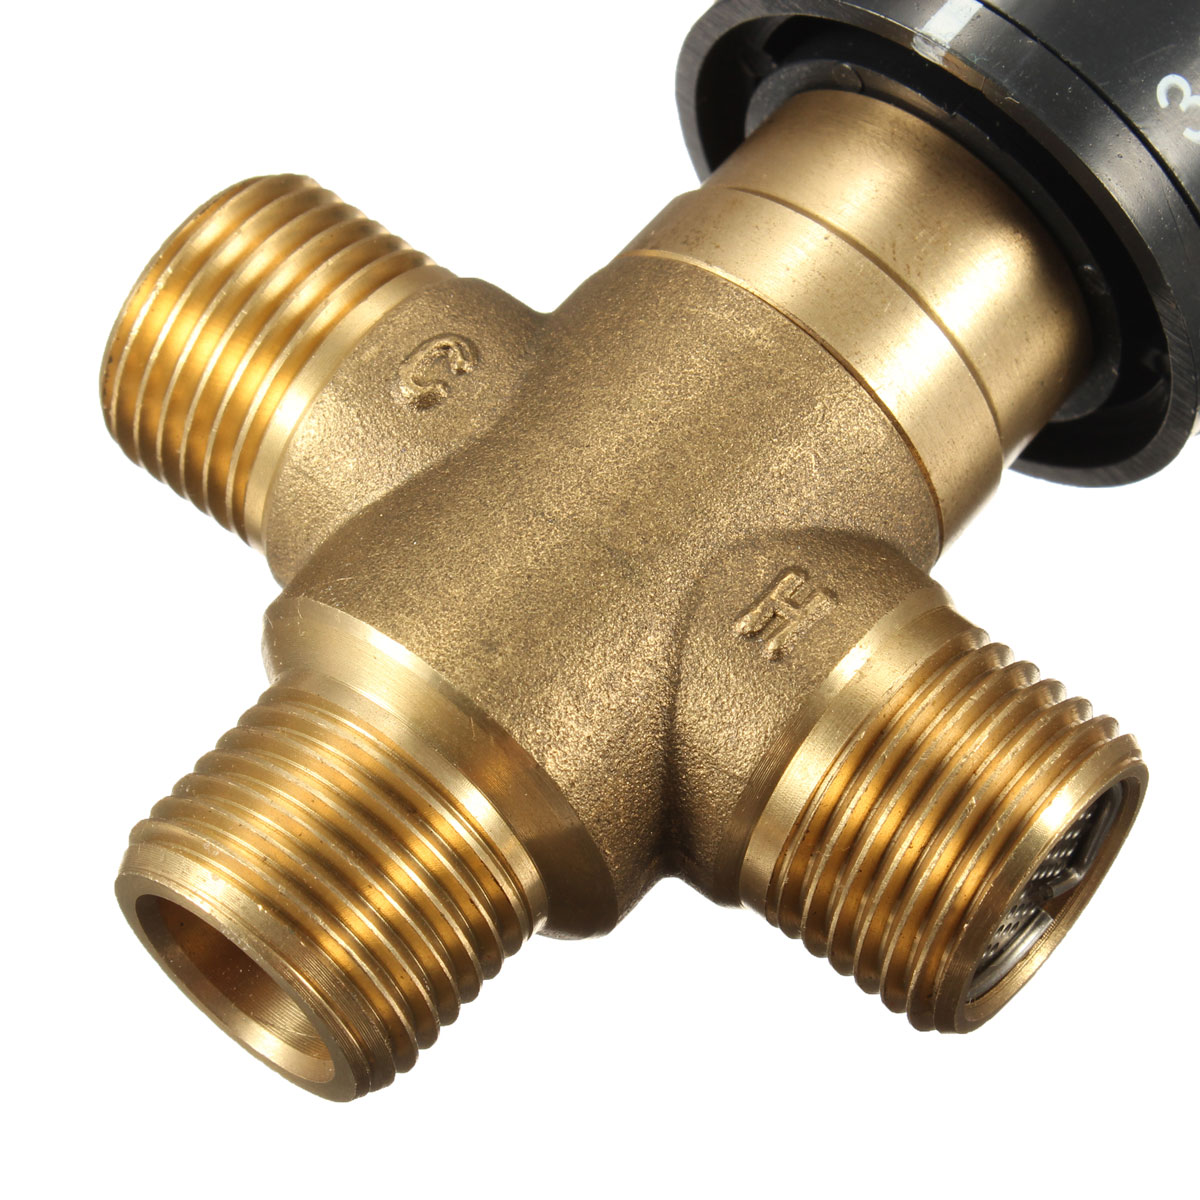 Brass-Thermostatic-Valve-Temperature-Mixing-Valve-For-Wash-Basin-Bidet-Shower-1290505-6